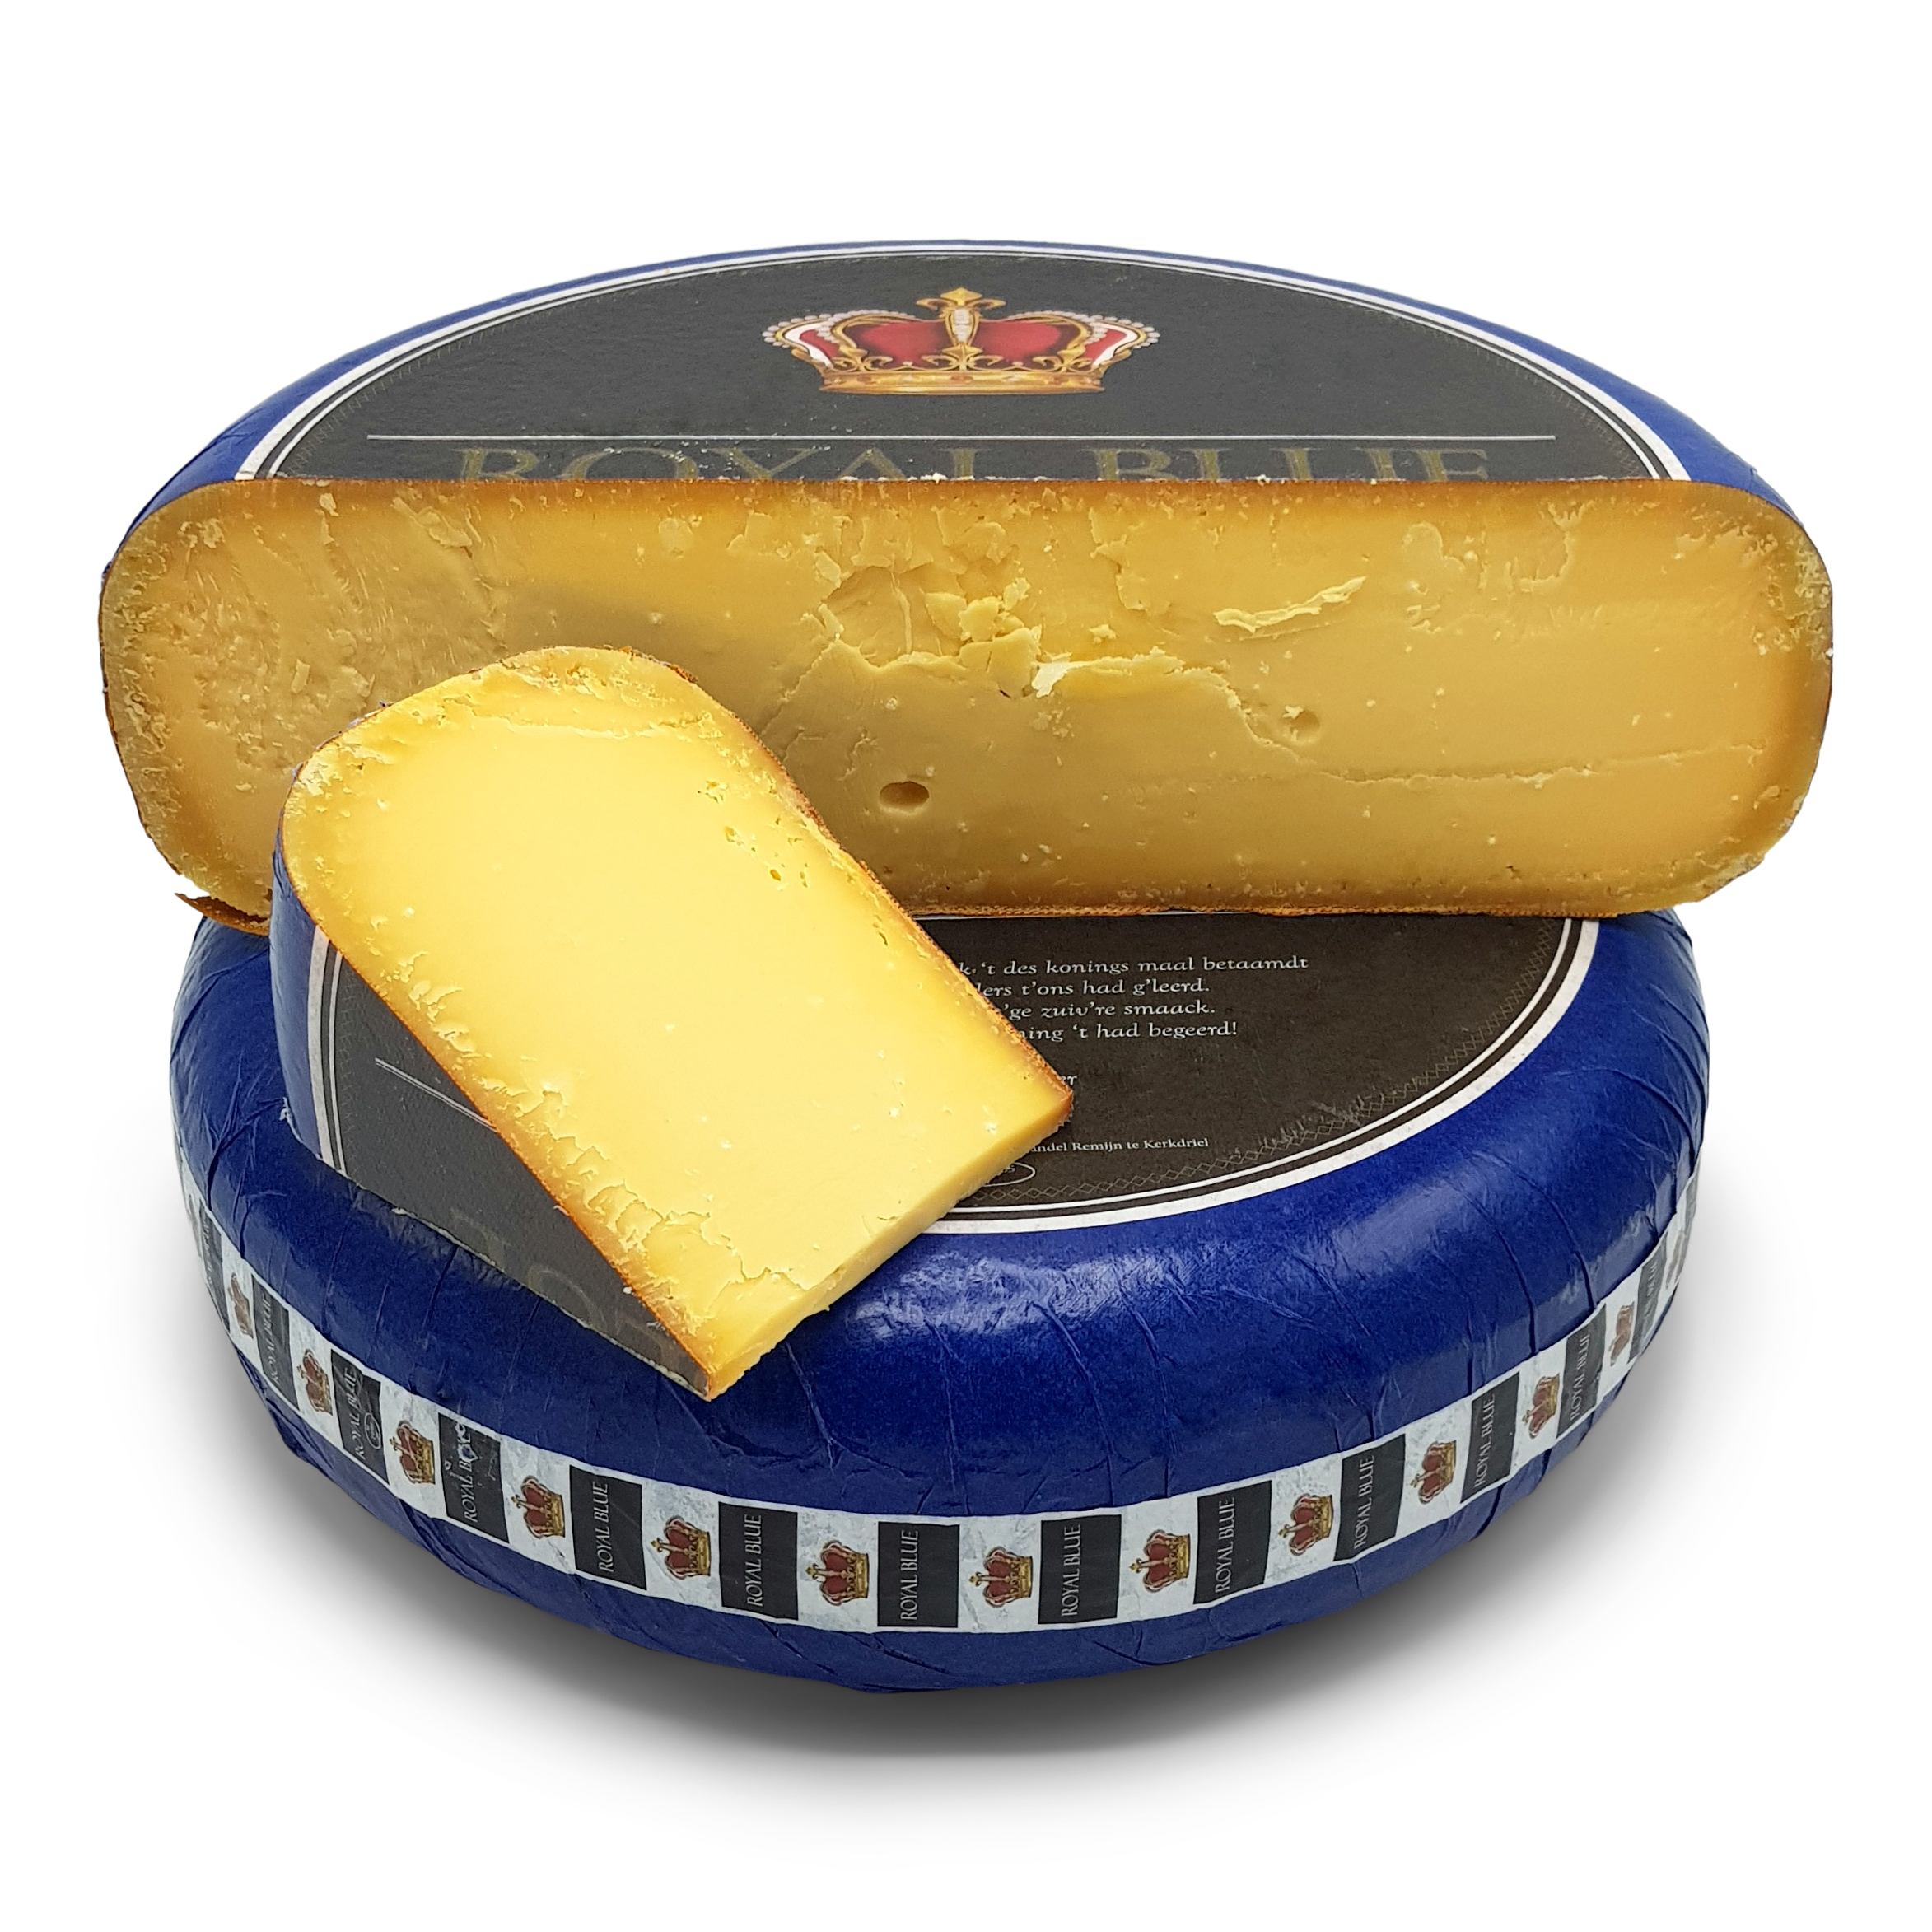 Overjarige kaas (+/- 1 tot 2 jaar gerijpt)